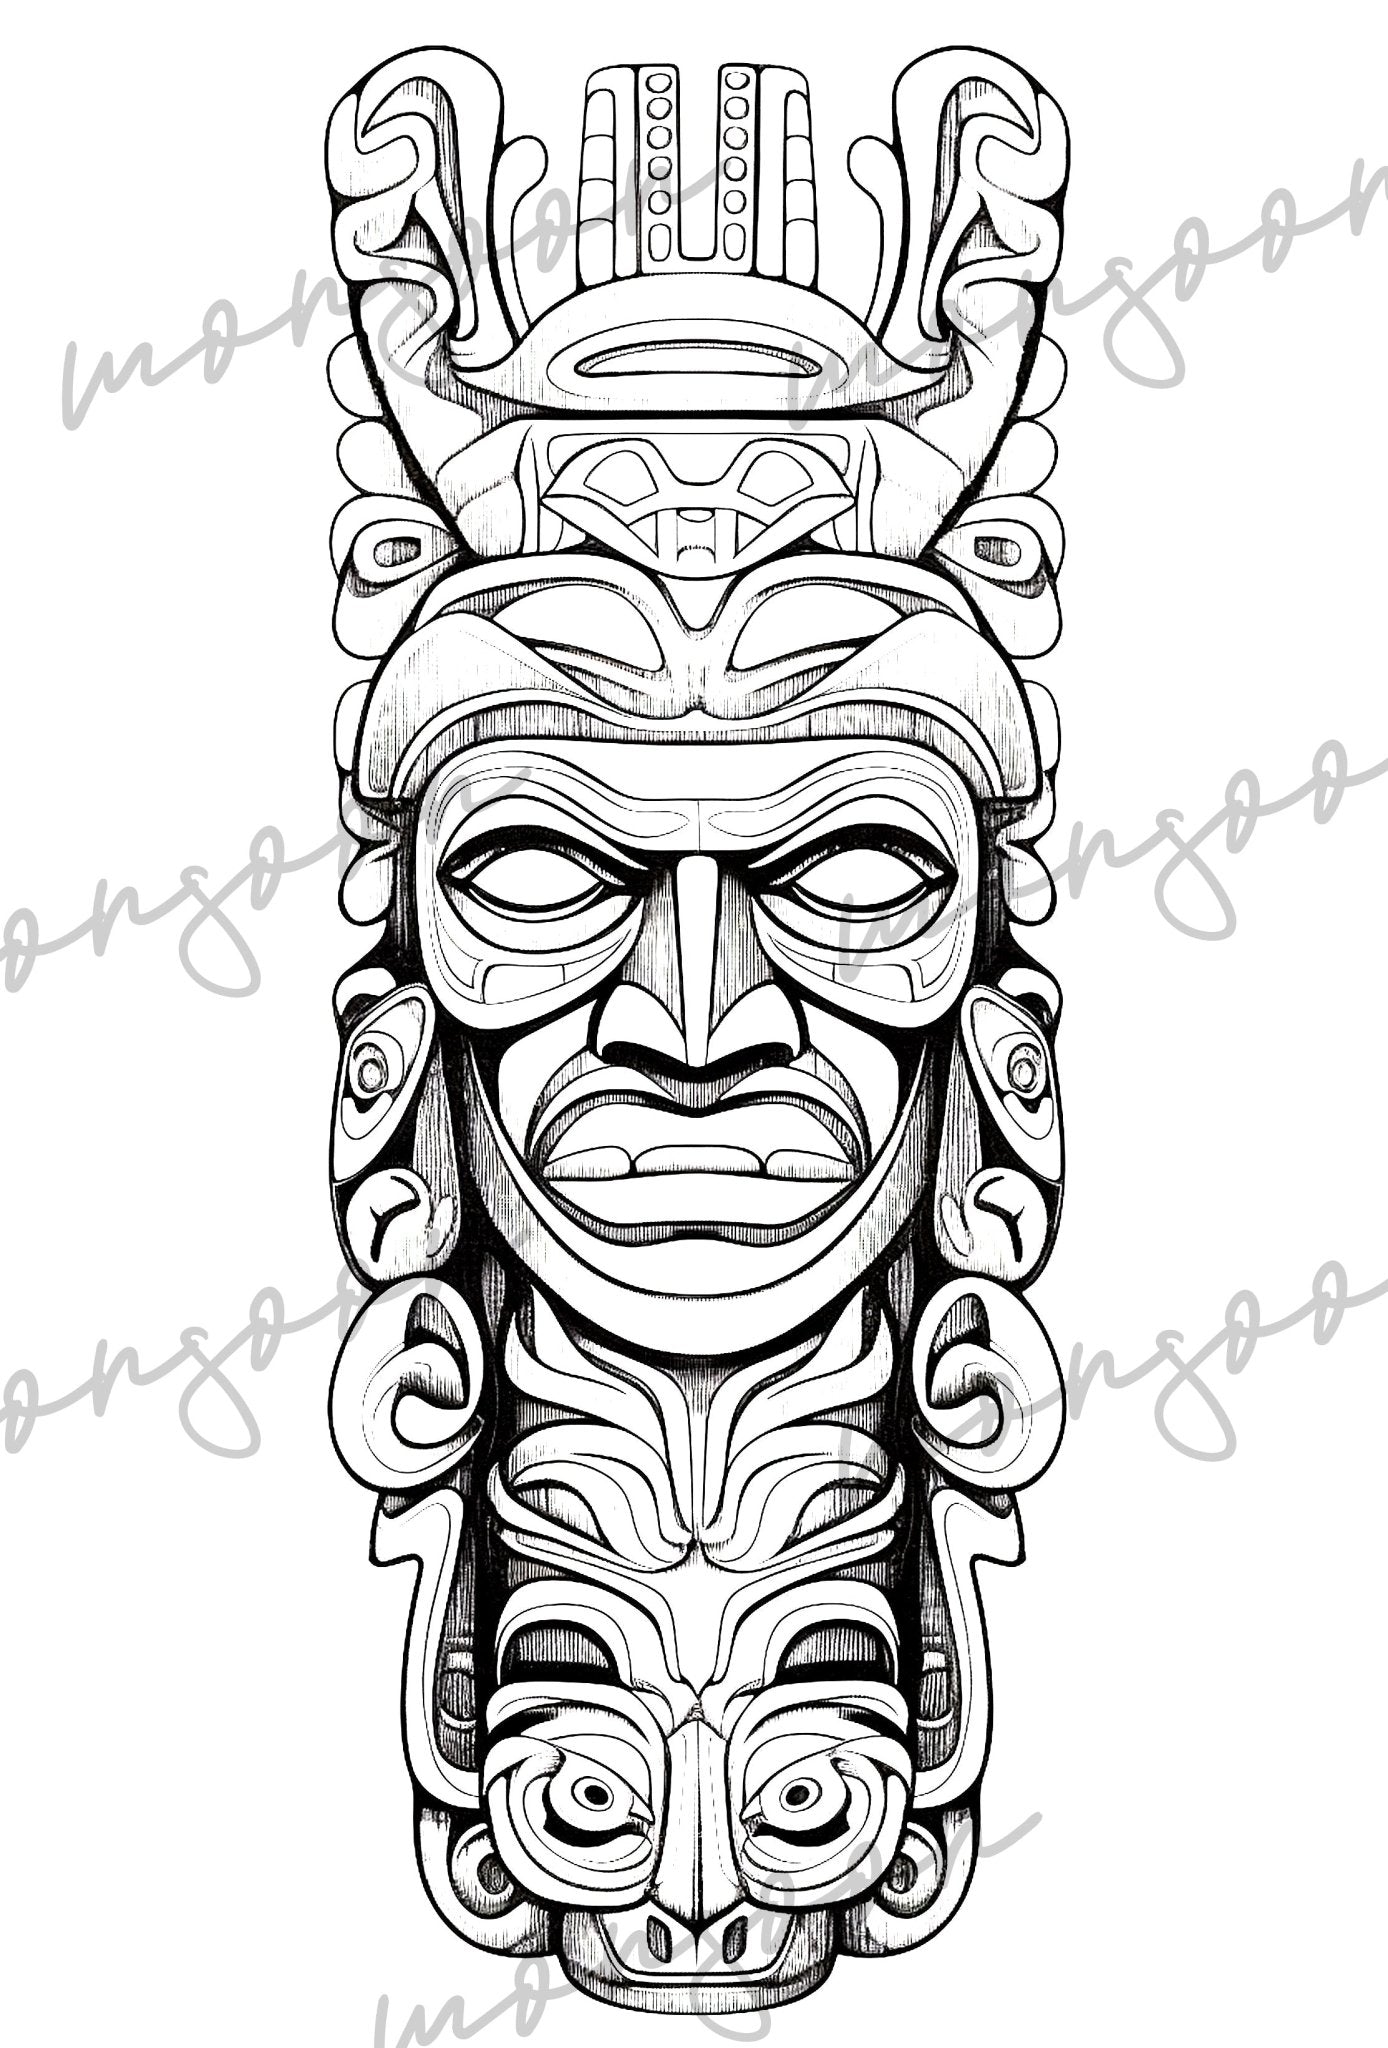 Native Masks Coloring Book Grayscale (Digital) - Monsoon Publishing USA